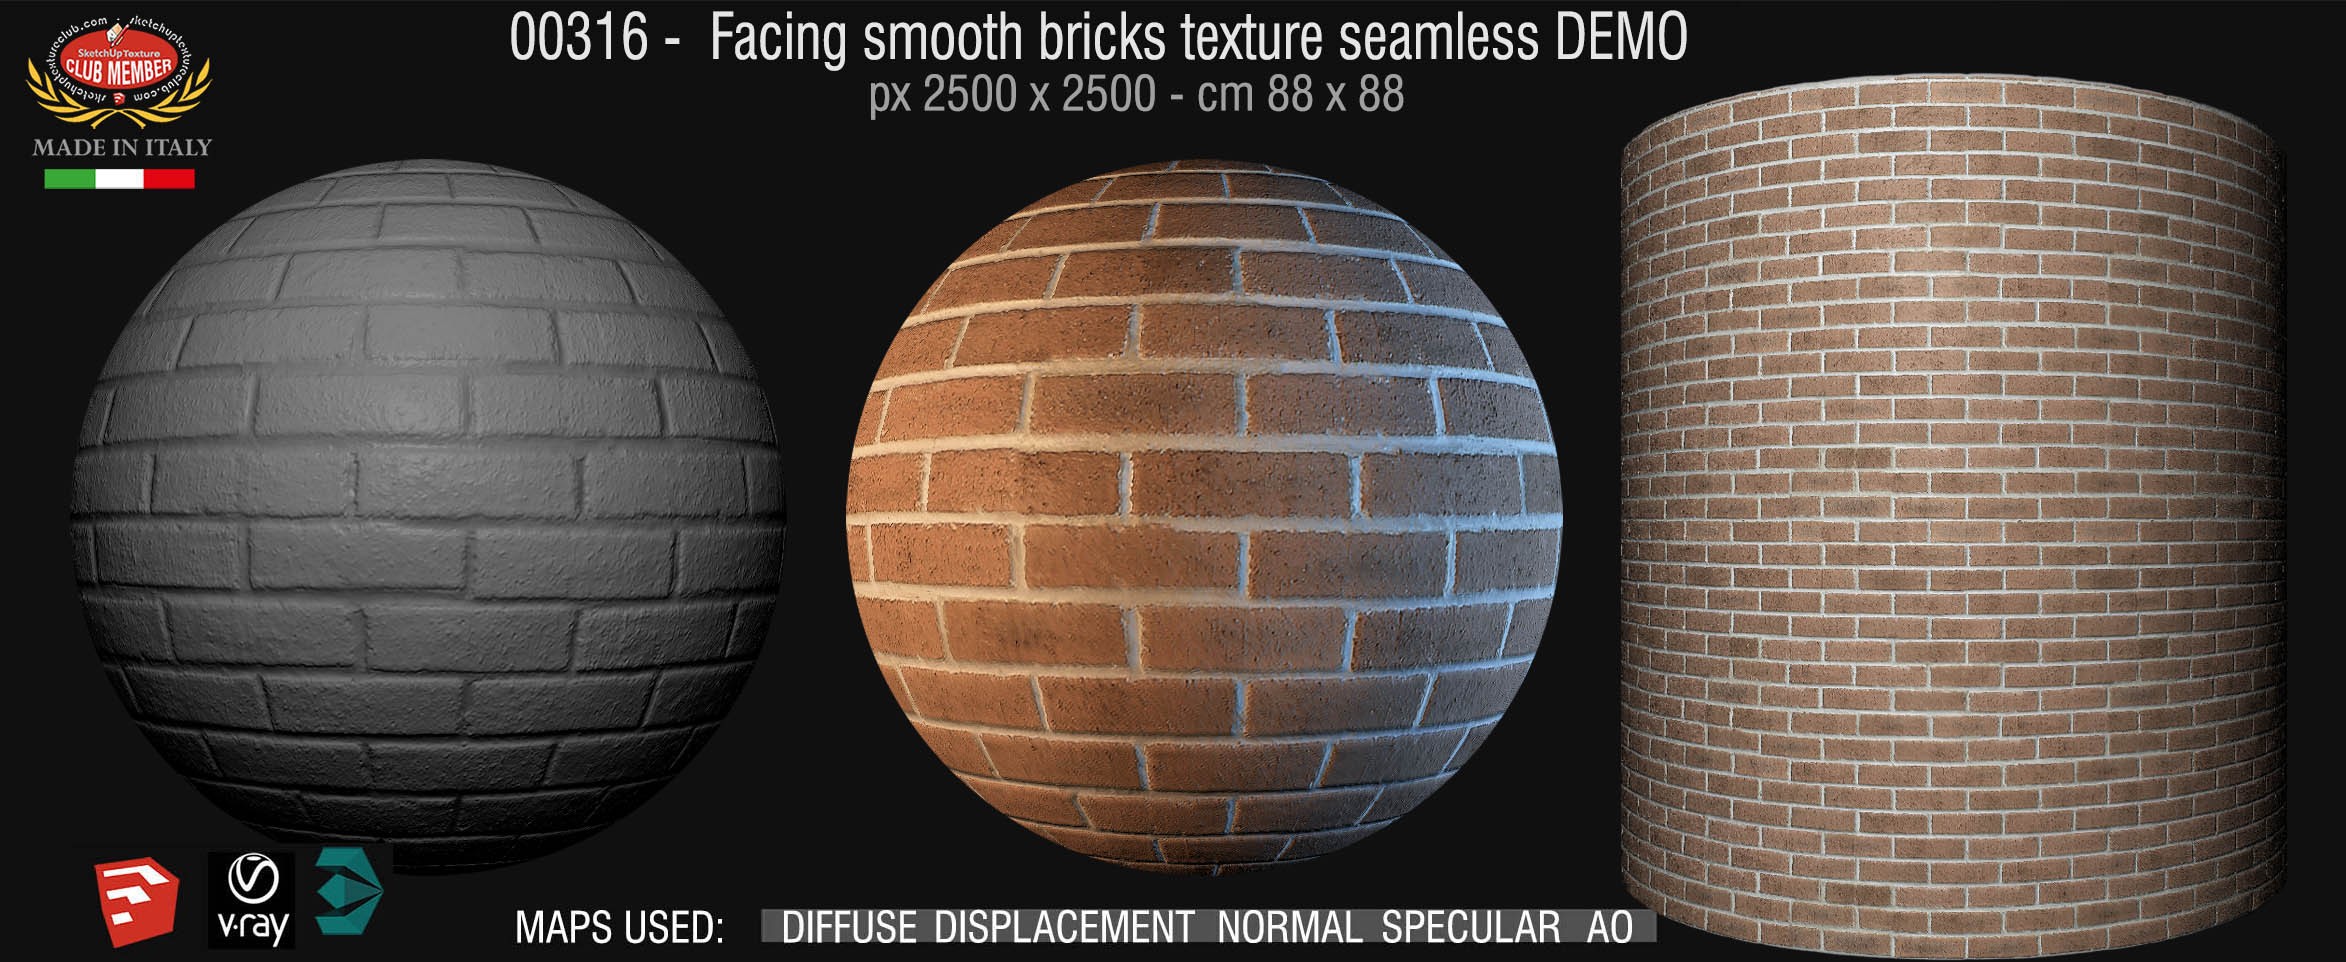 00316 Facing smooth bricks texture seamless + maps DEMO